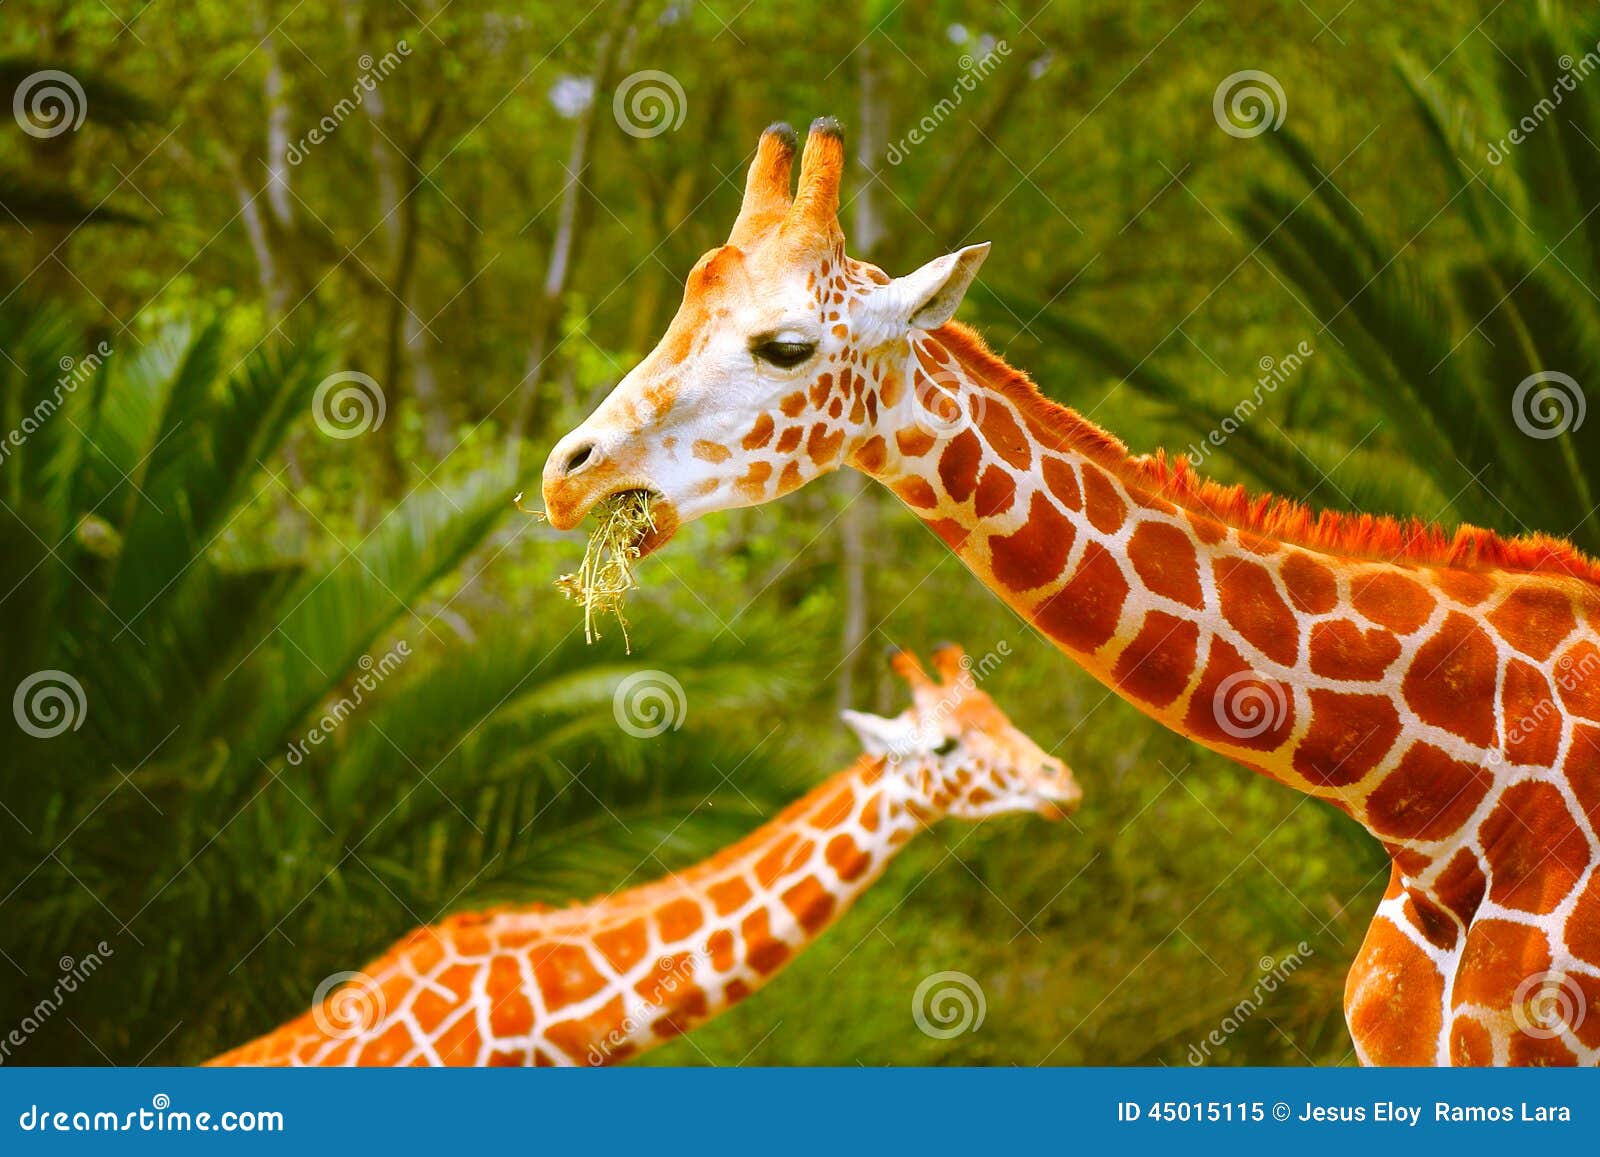 giraffes in chapultepec zoo, mexico city.  iii